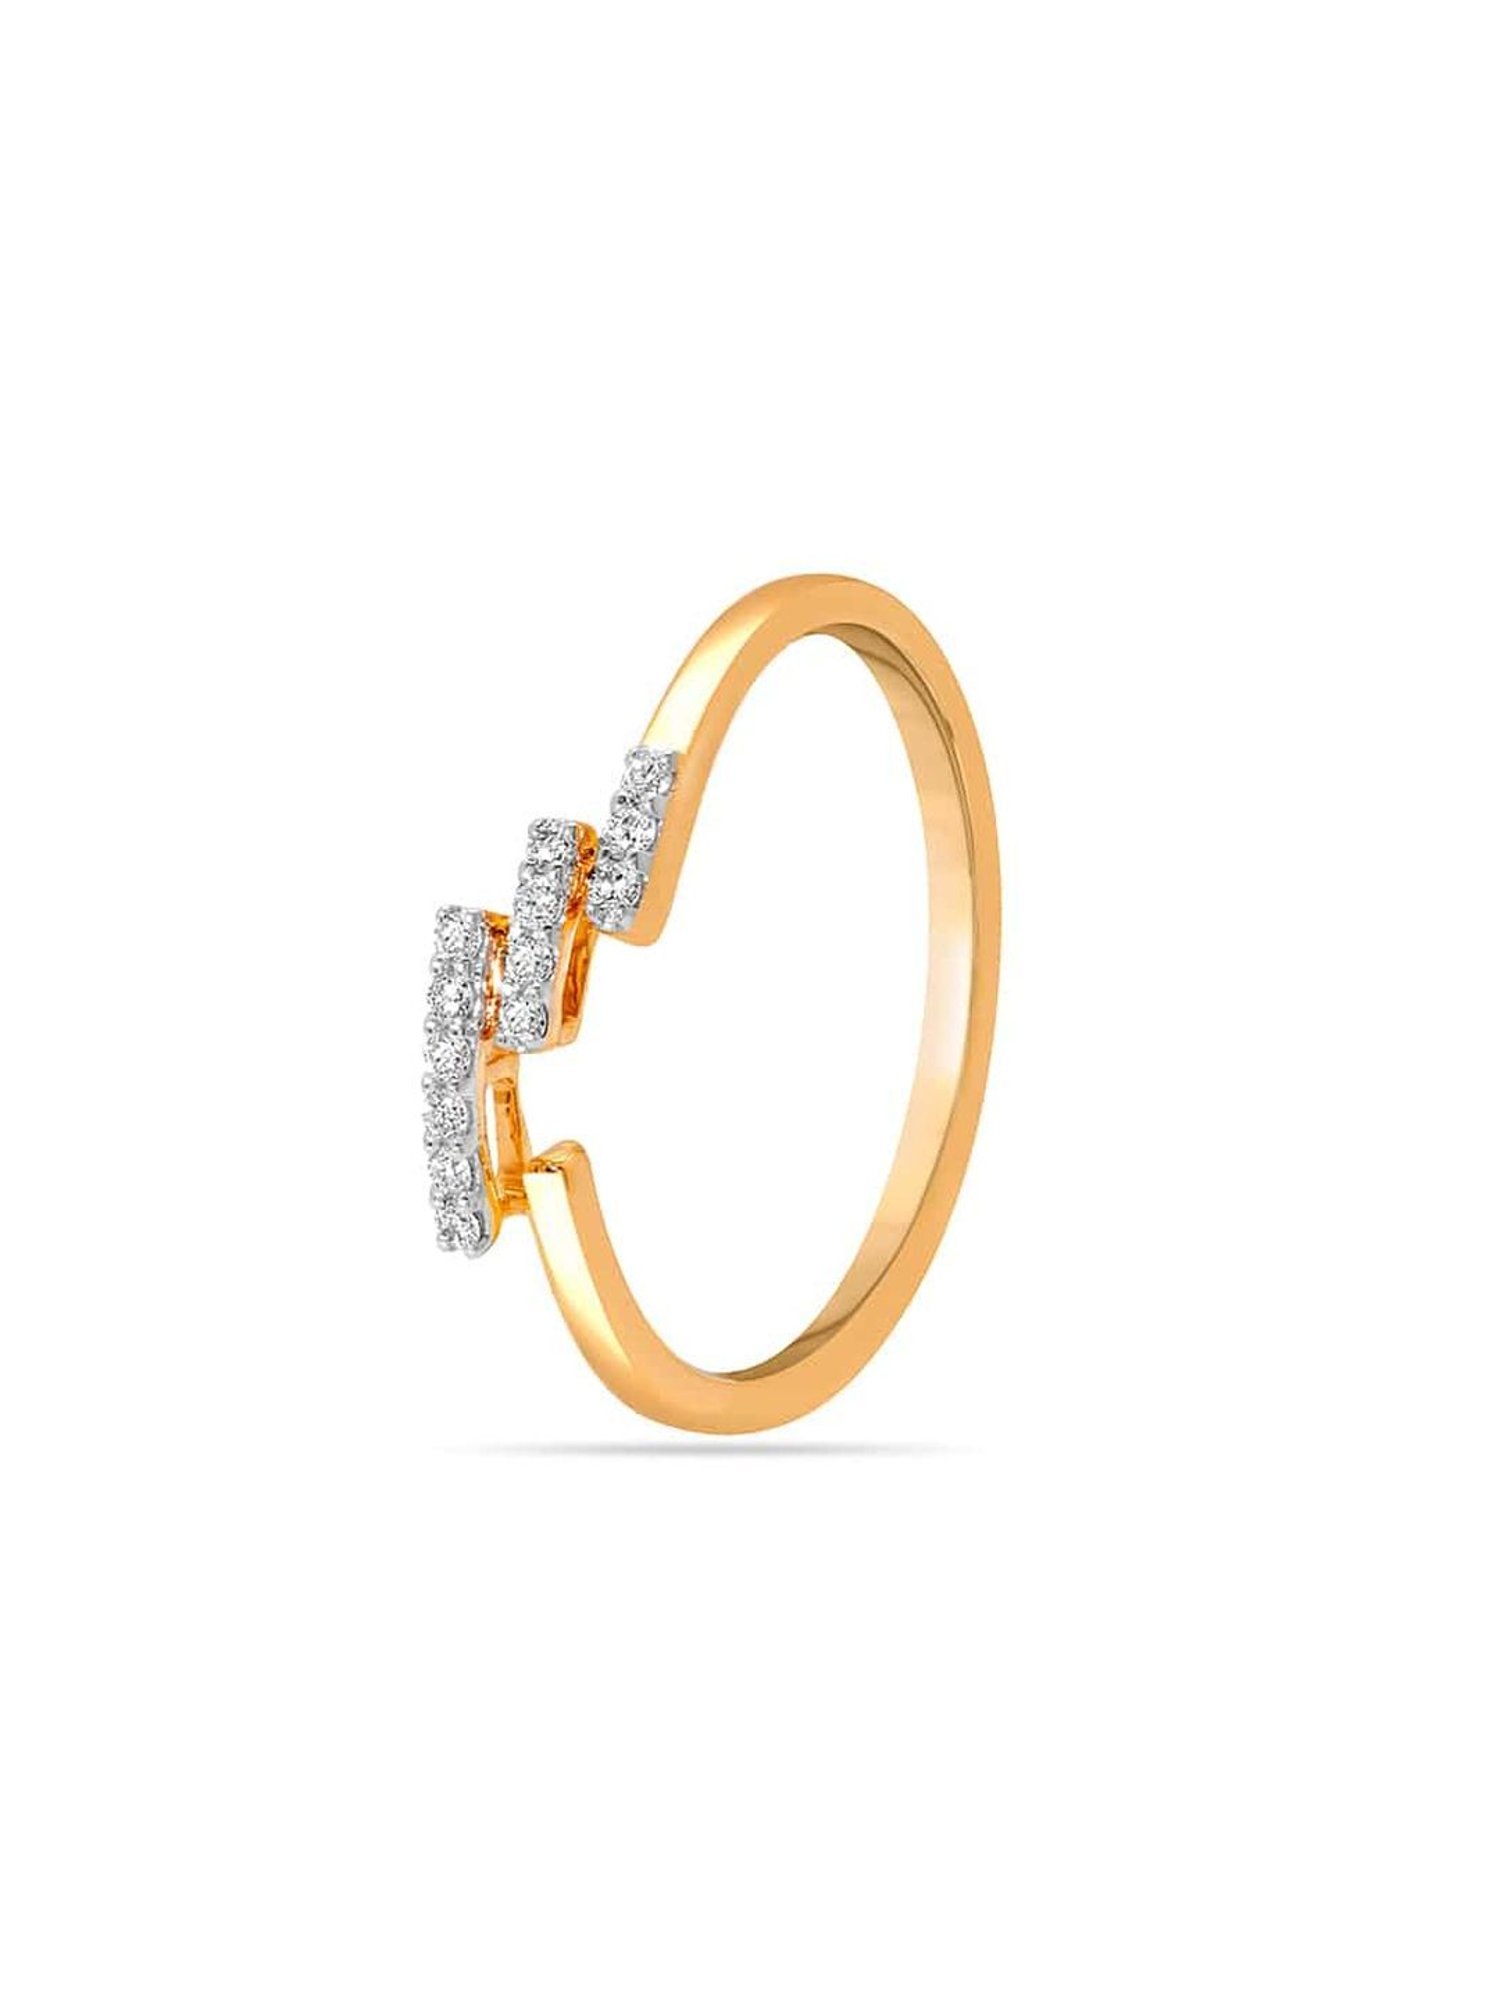 Enchanting 18 Karat Yellow Gold And Diamond Trail Finger Ring